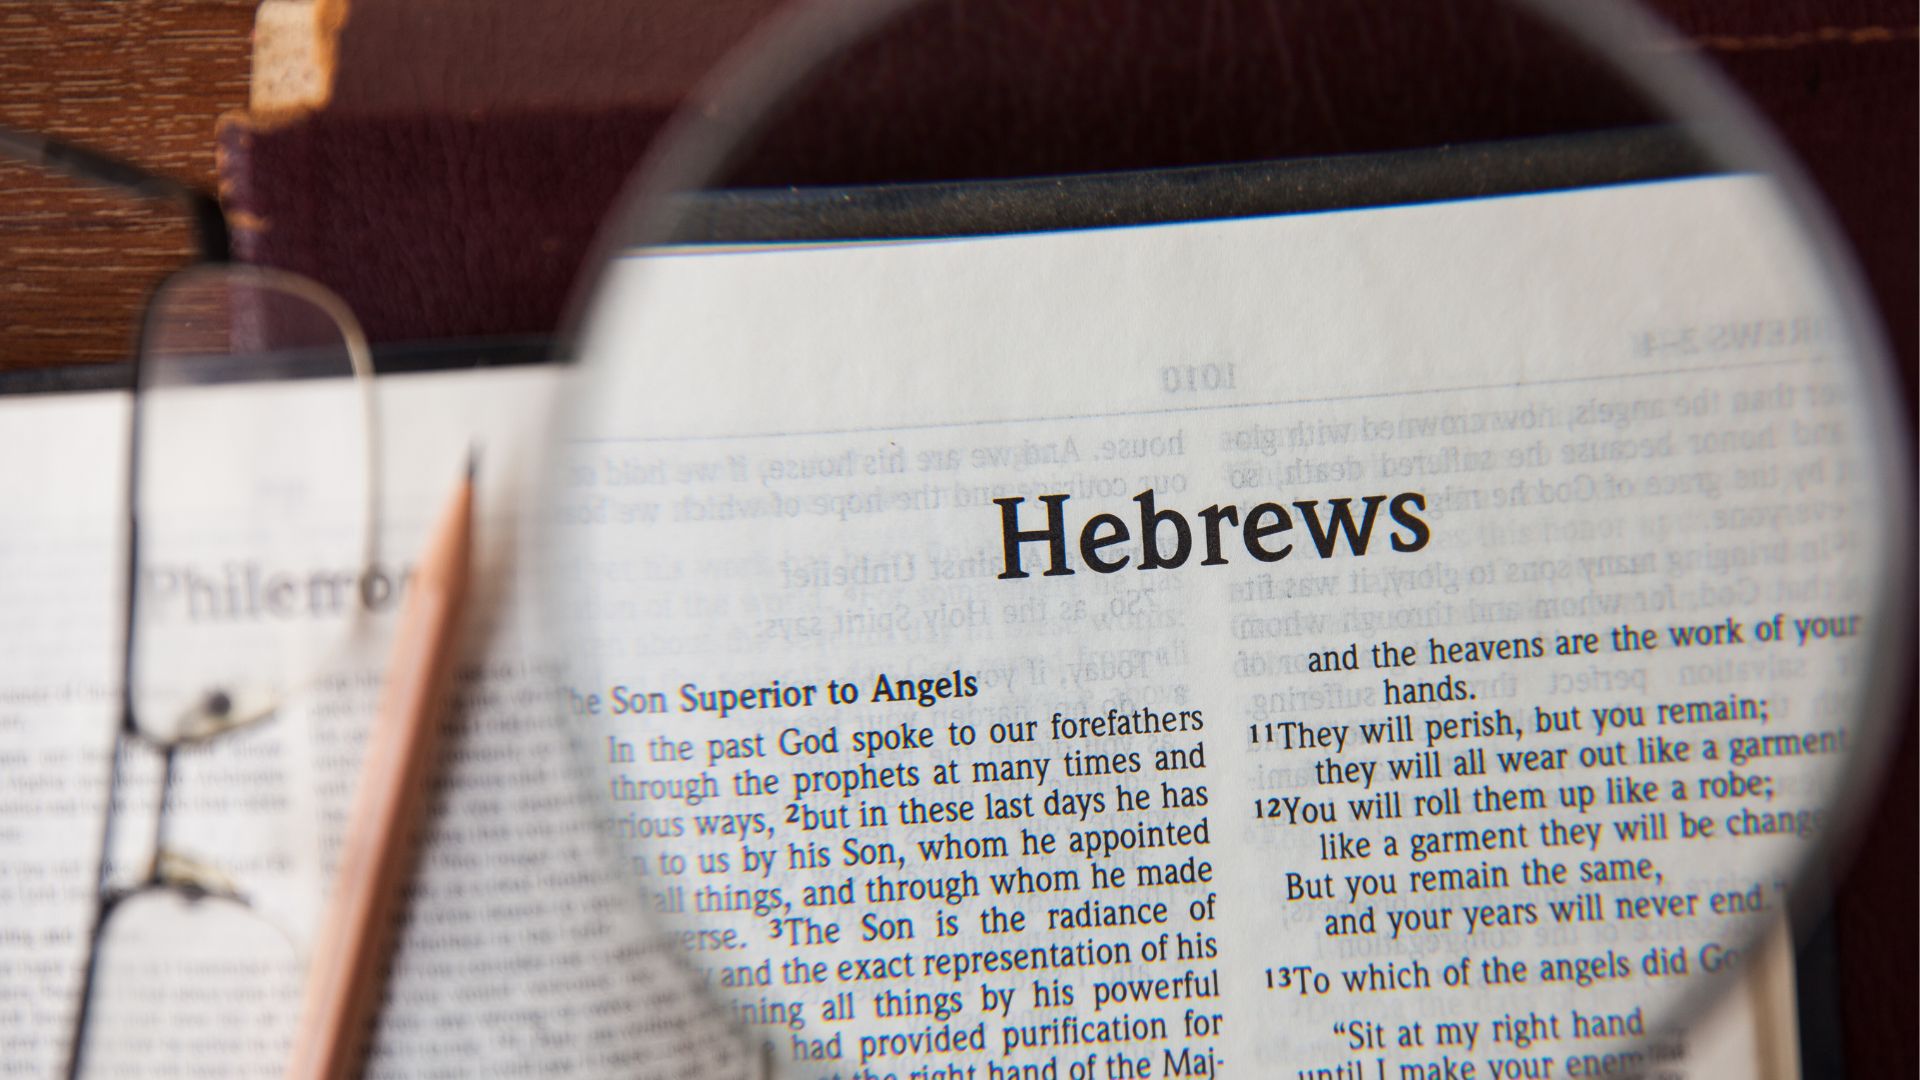 Lupa indicando livro de Hebreus.